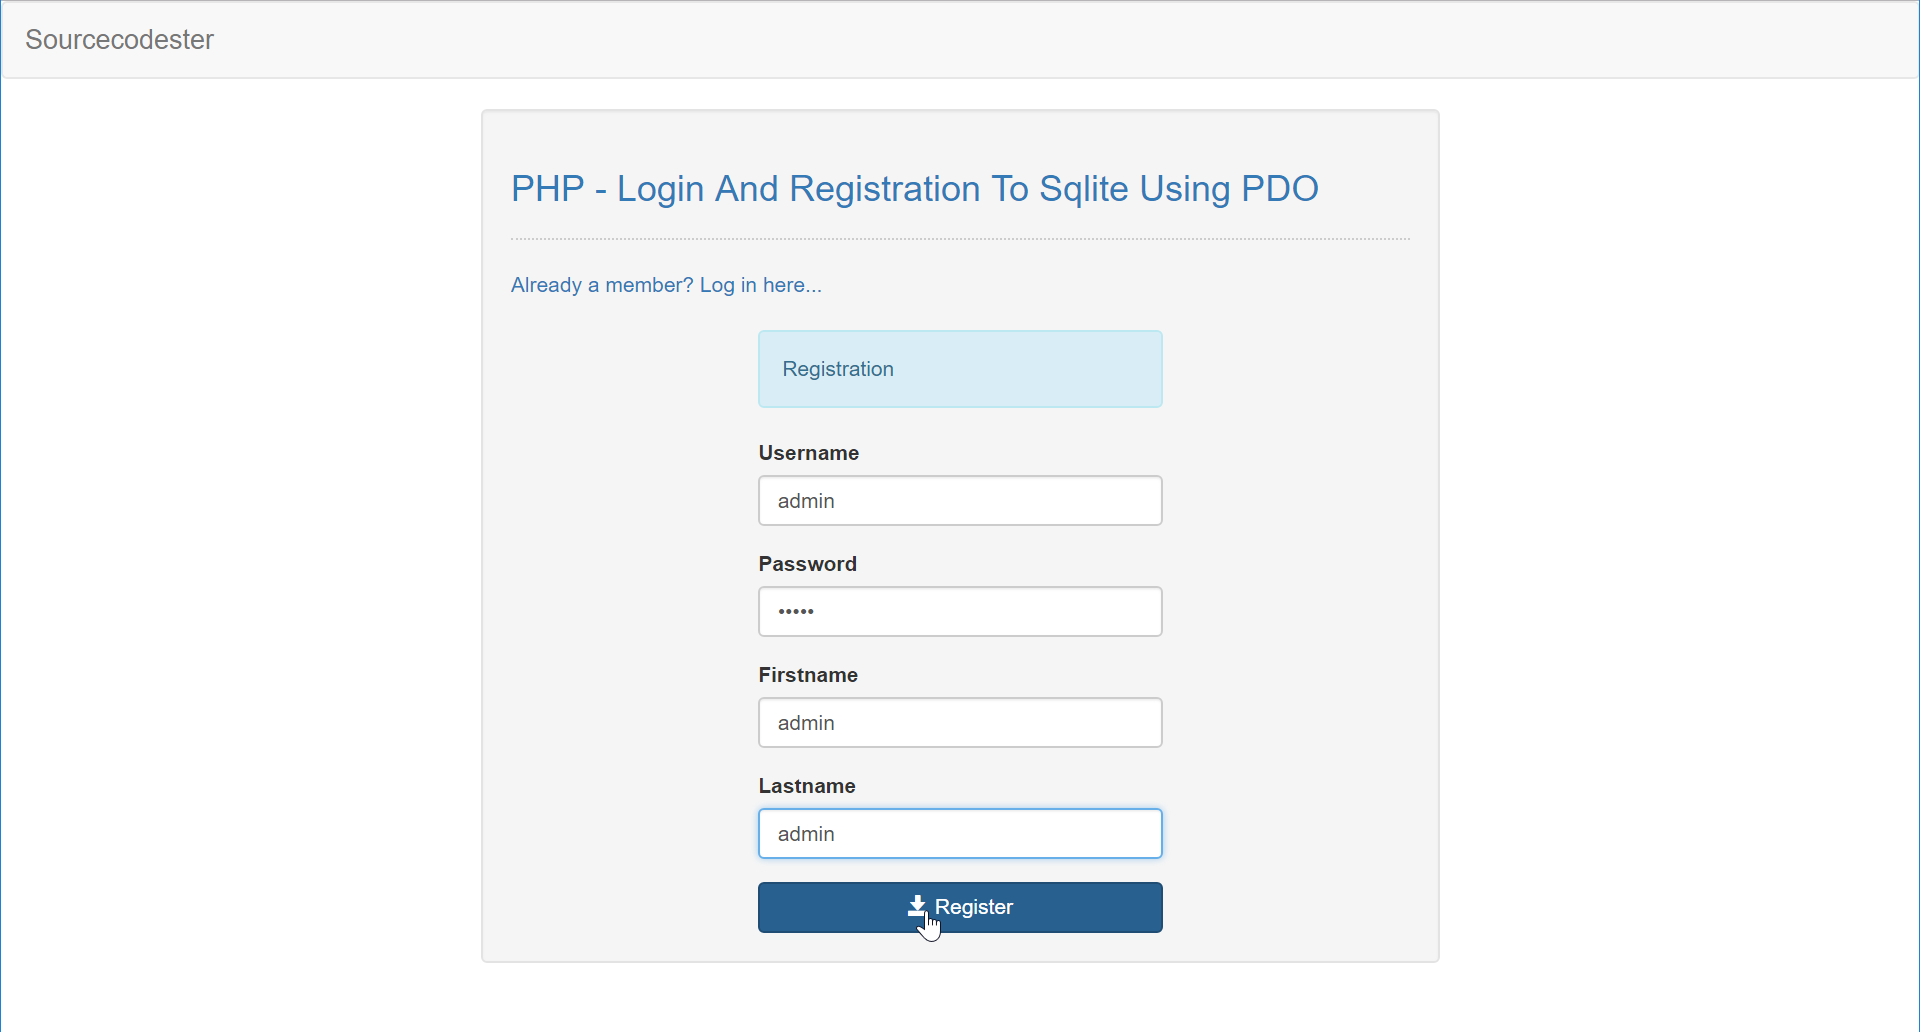 uubyte registration code